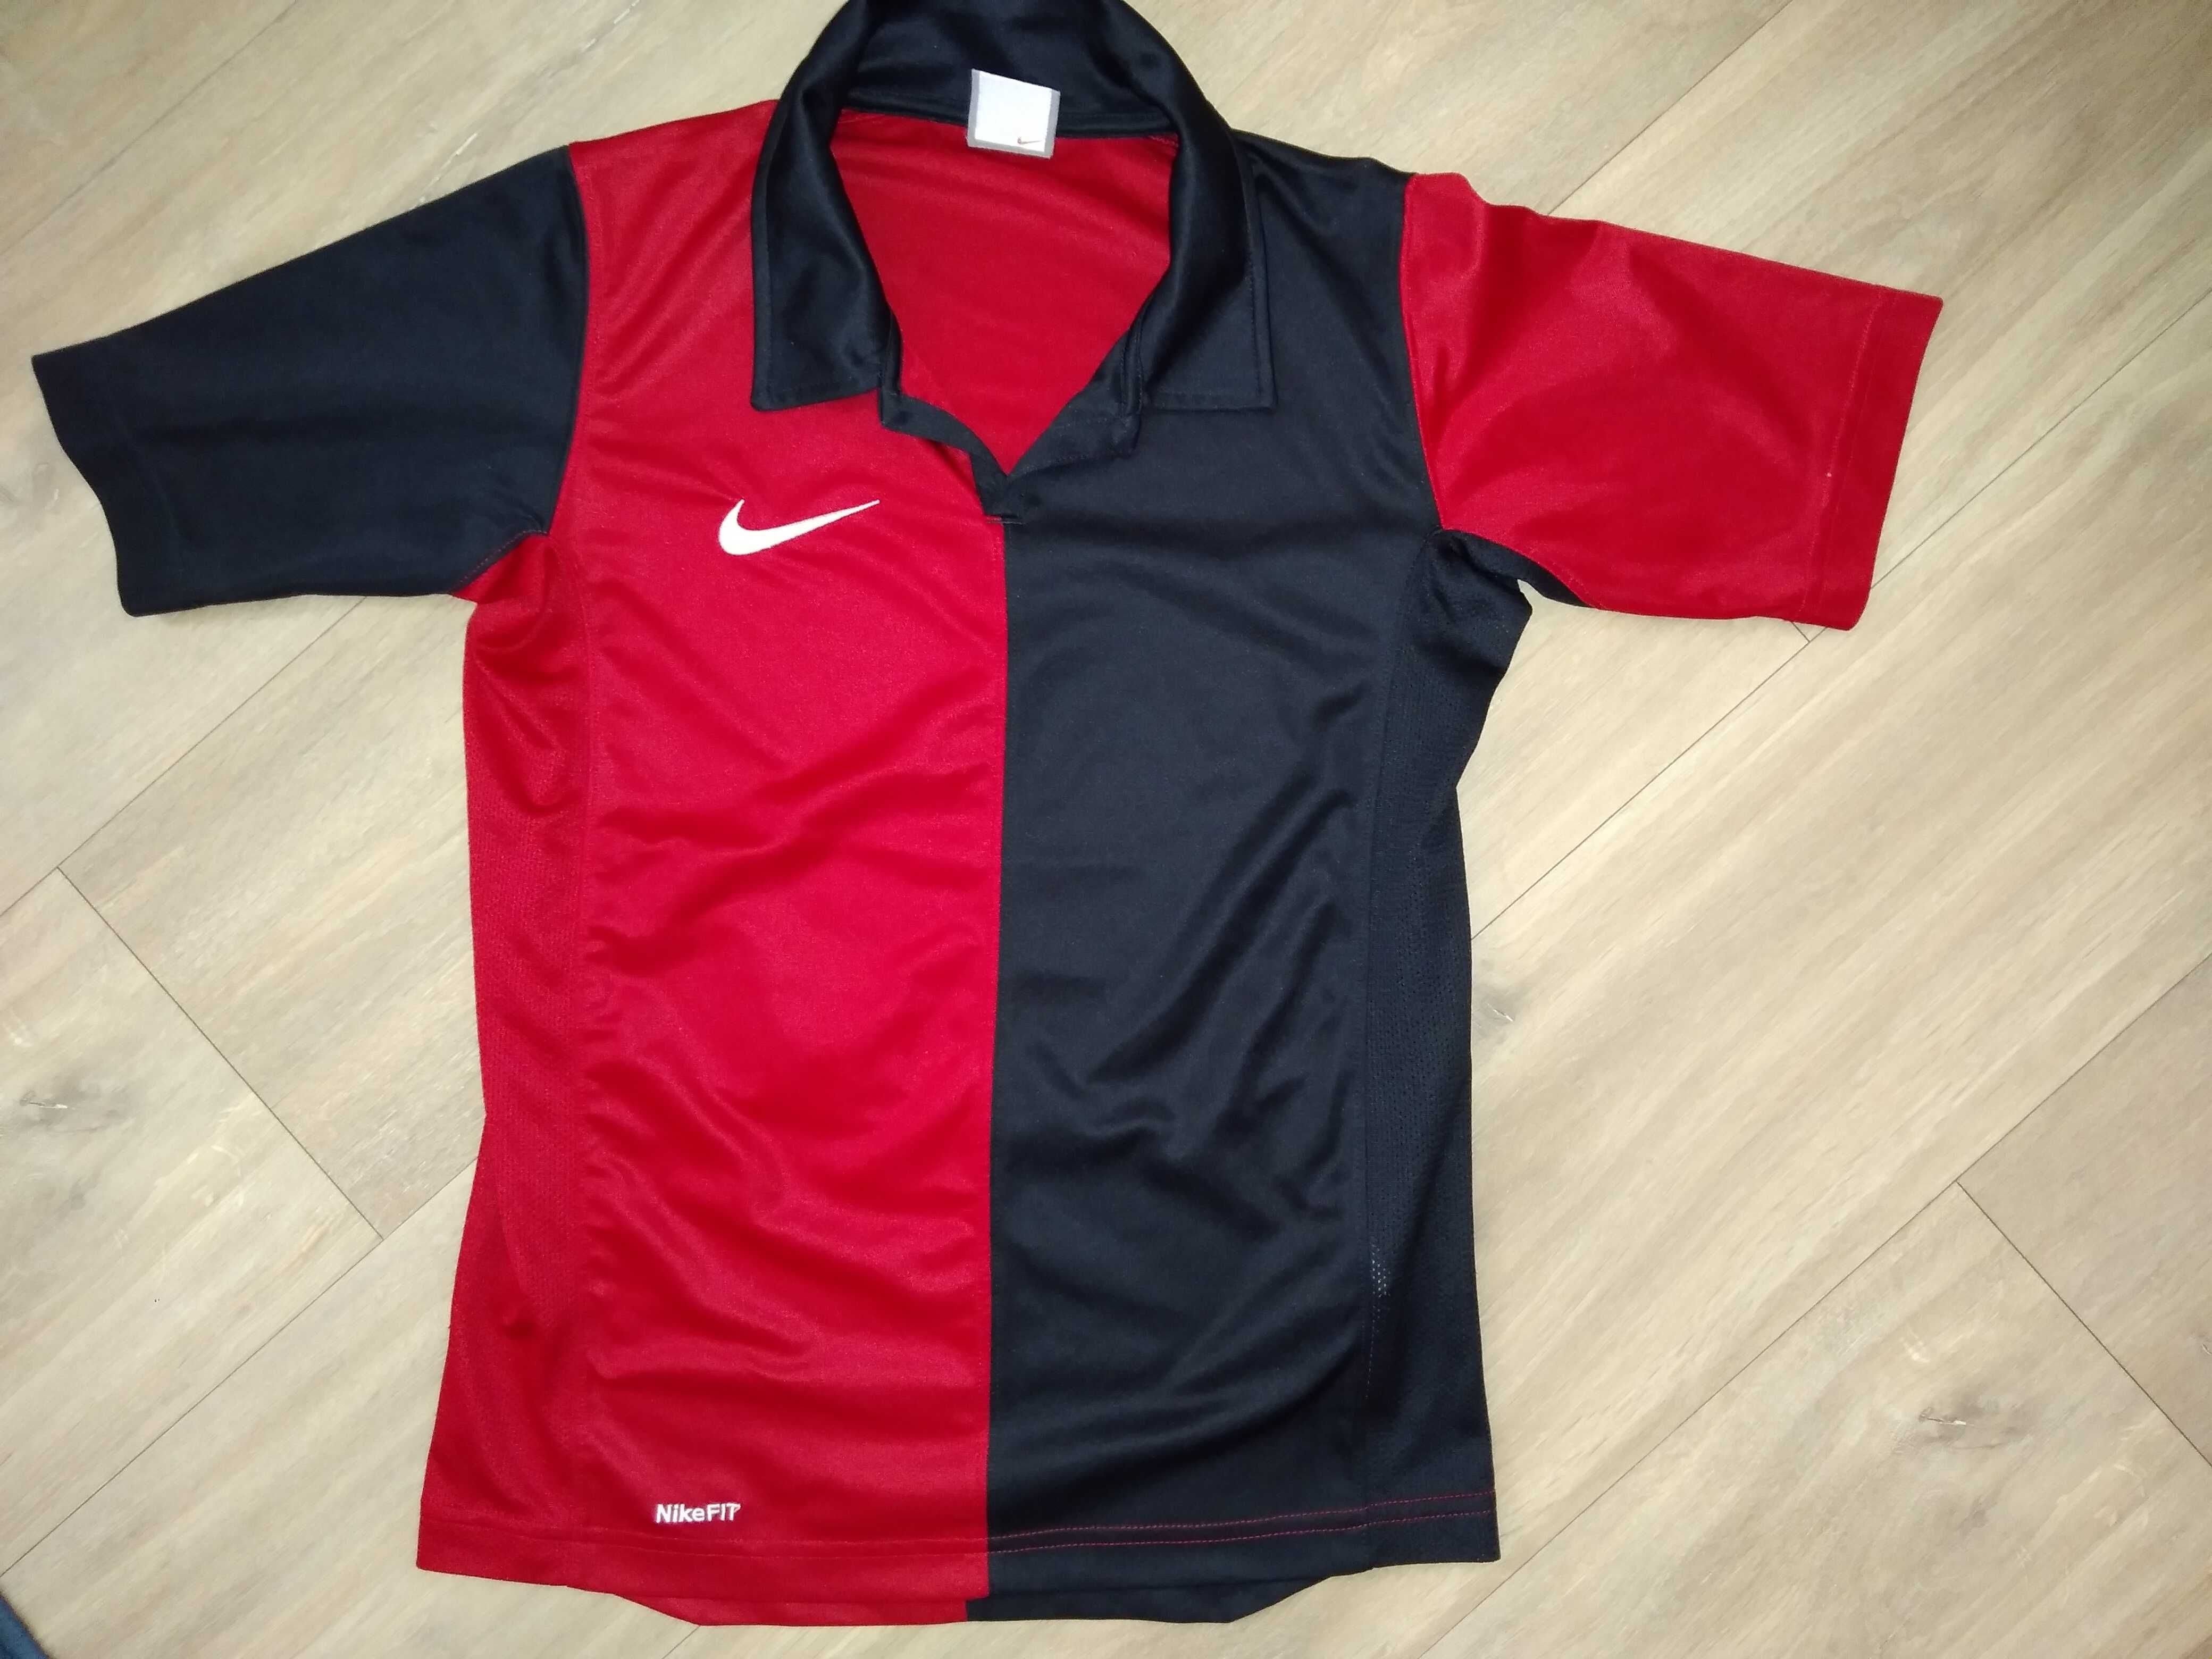 T-shirt Koszulka Nike rozmiar 140/152, koszulka sportowa 140/152 Nike